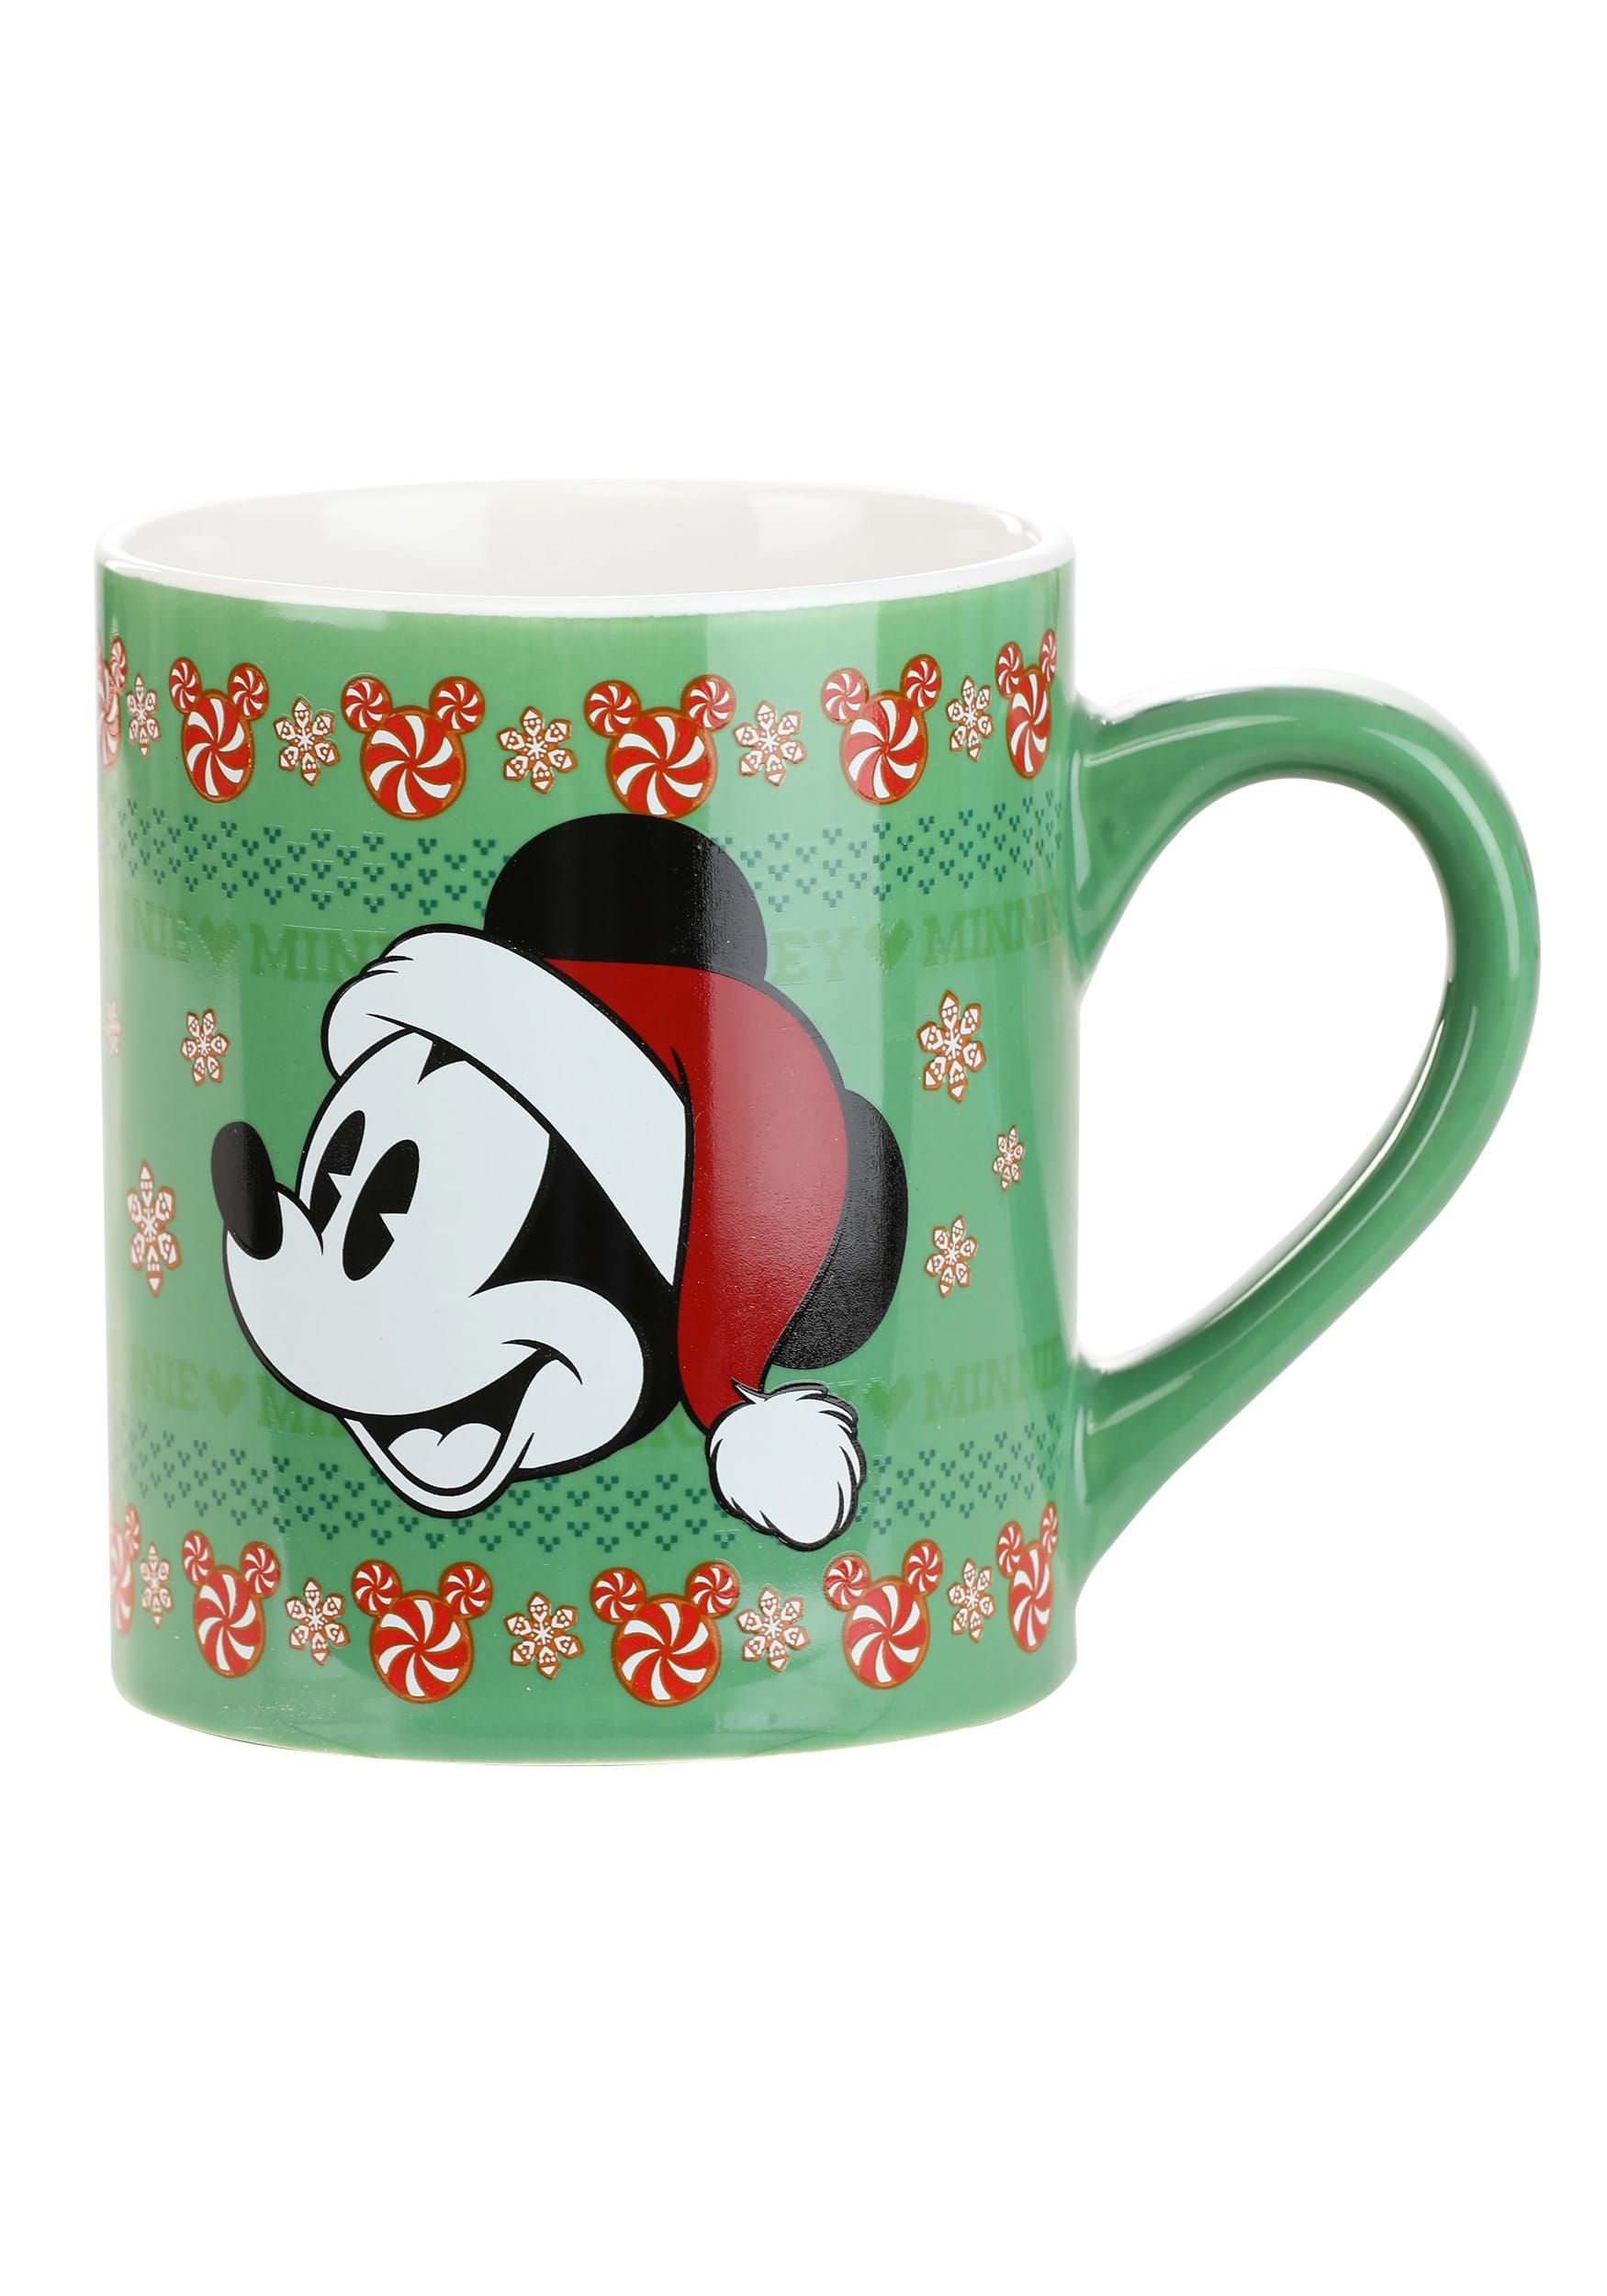 https://images.fun.com/products/80020/2-1-211092/disney-christmas-14oz-ceramic-mug-2-pack-alt-2.jpg